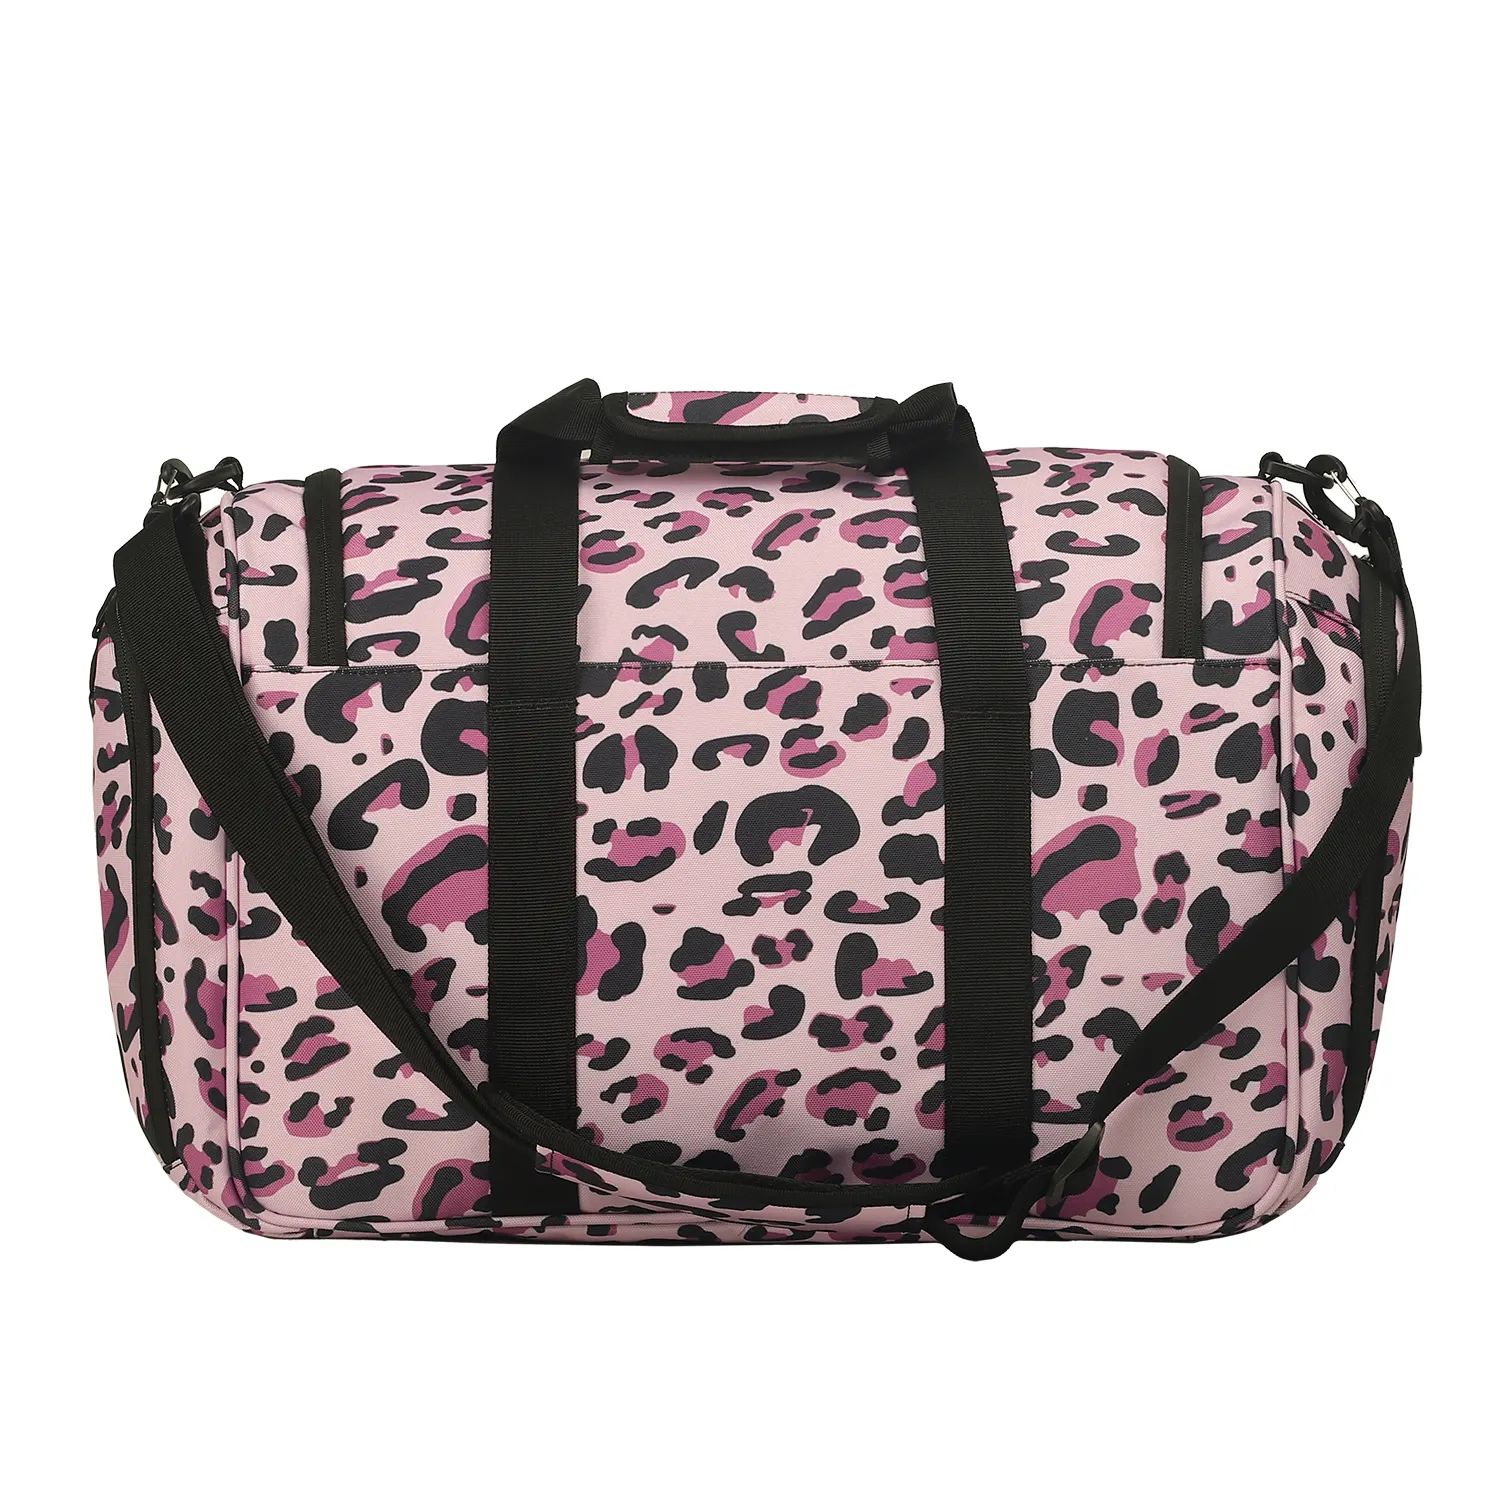 Bolsa de leopardo impermeable deportiva personalizada de fábrica, bolsa de lona grande de viaje al aire libre de 50l para mujer